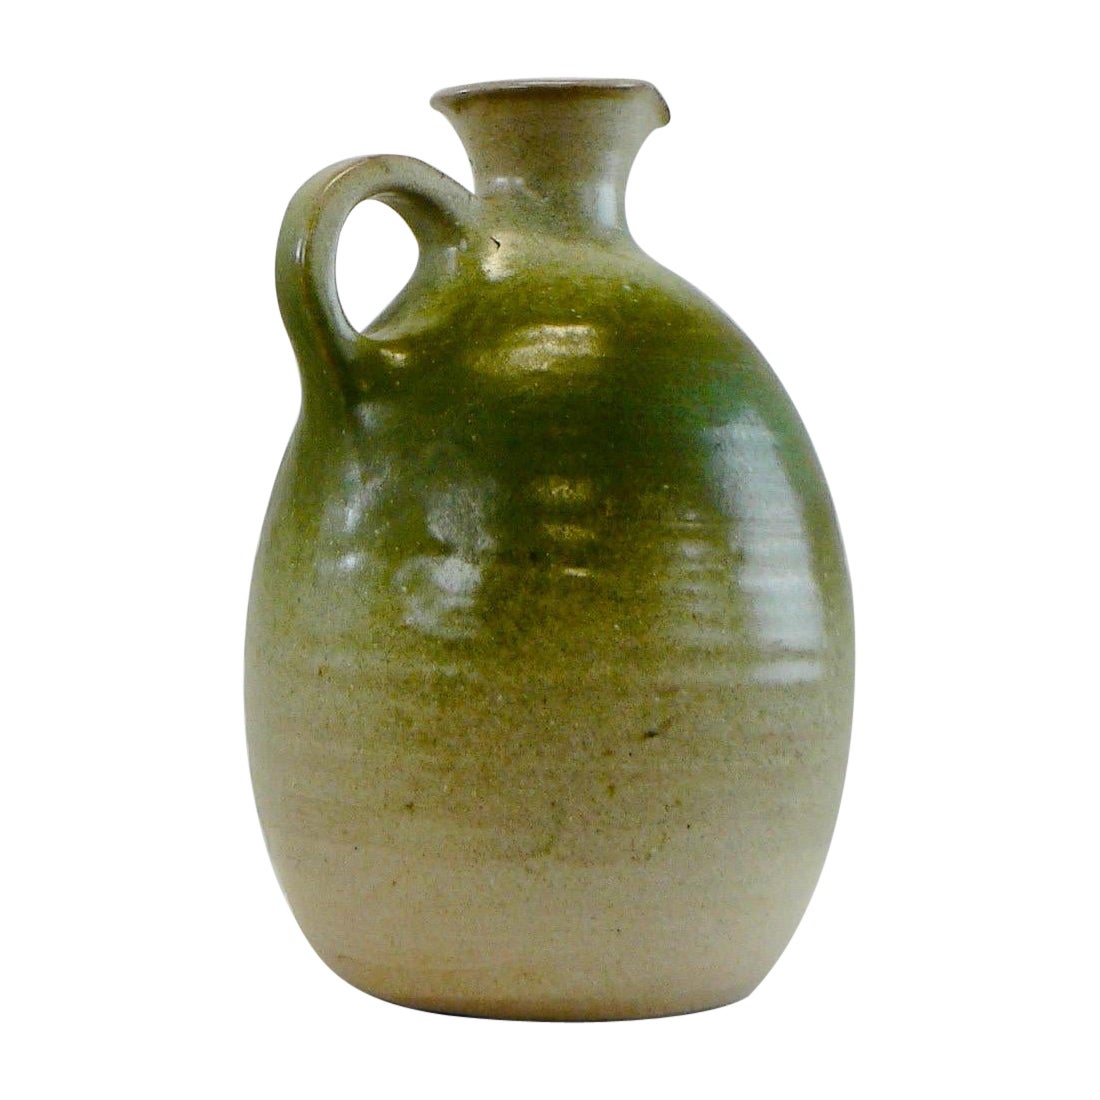 A ceramic french vase - France 1950